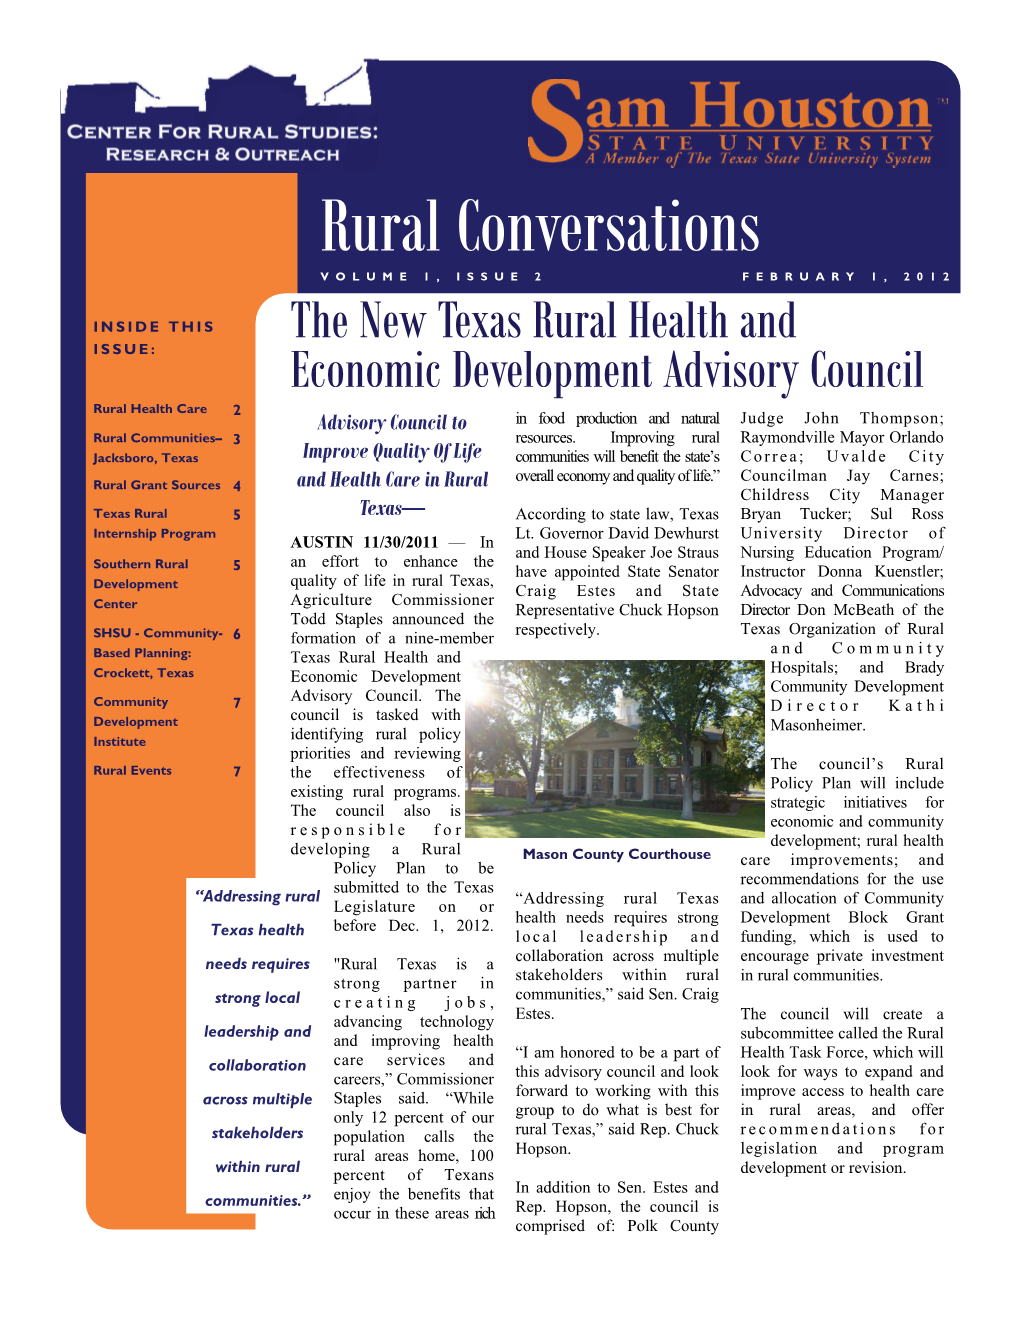 The New Texas Rural Health and Economic Development Advisory Council